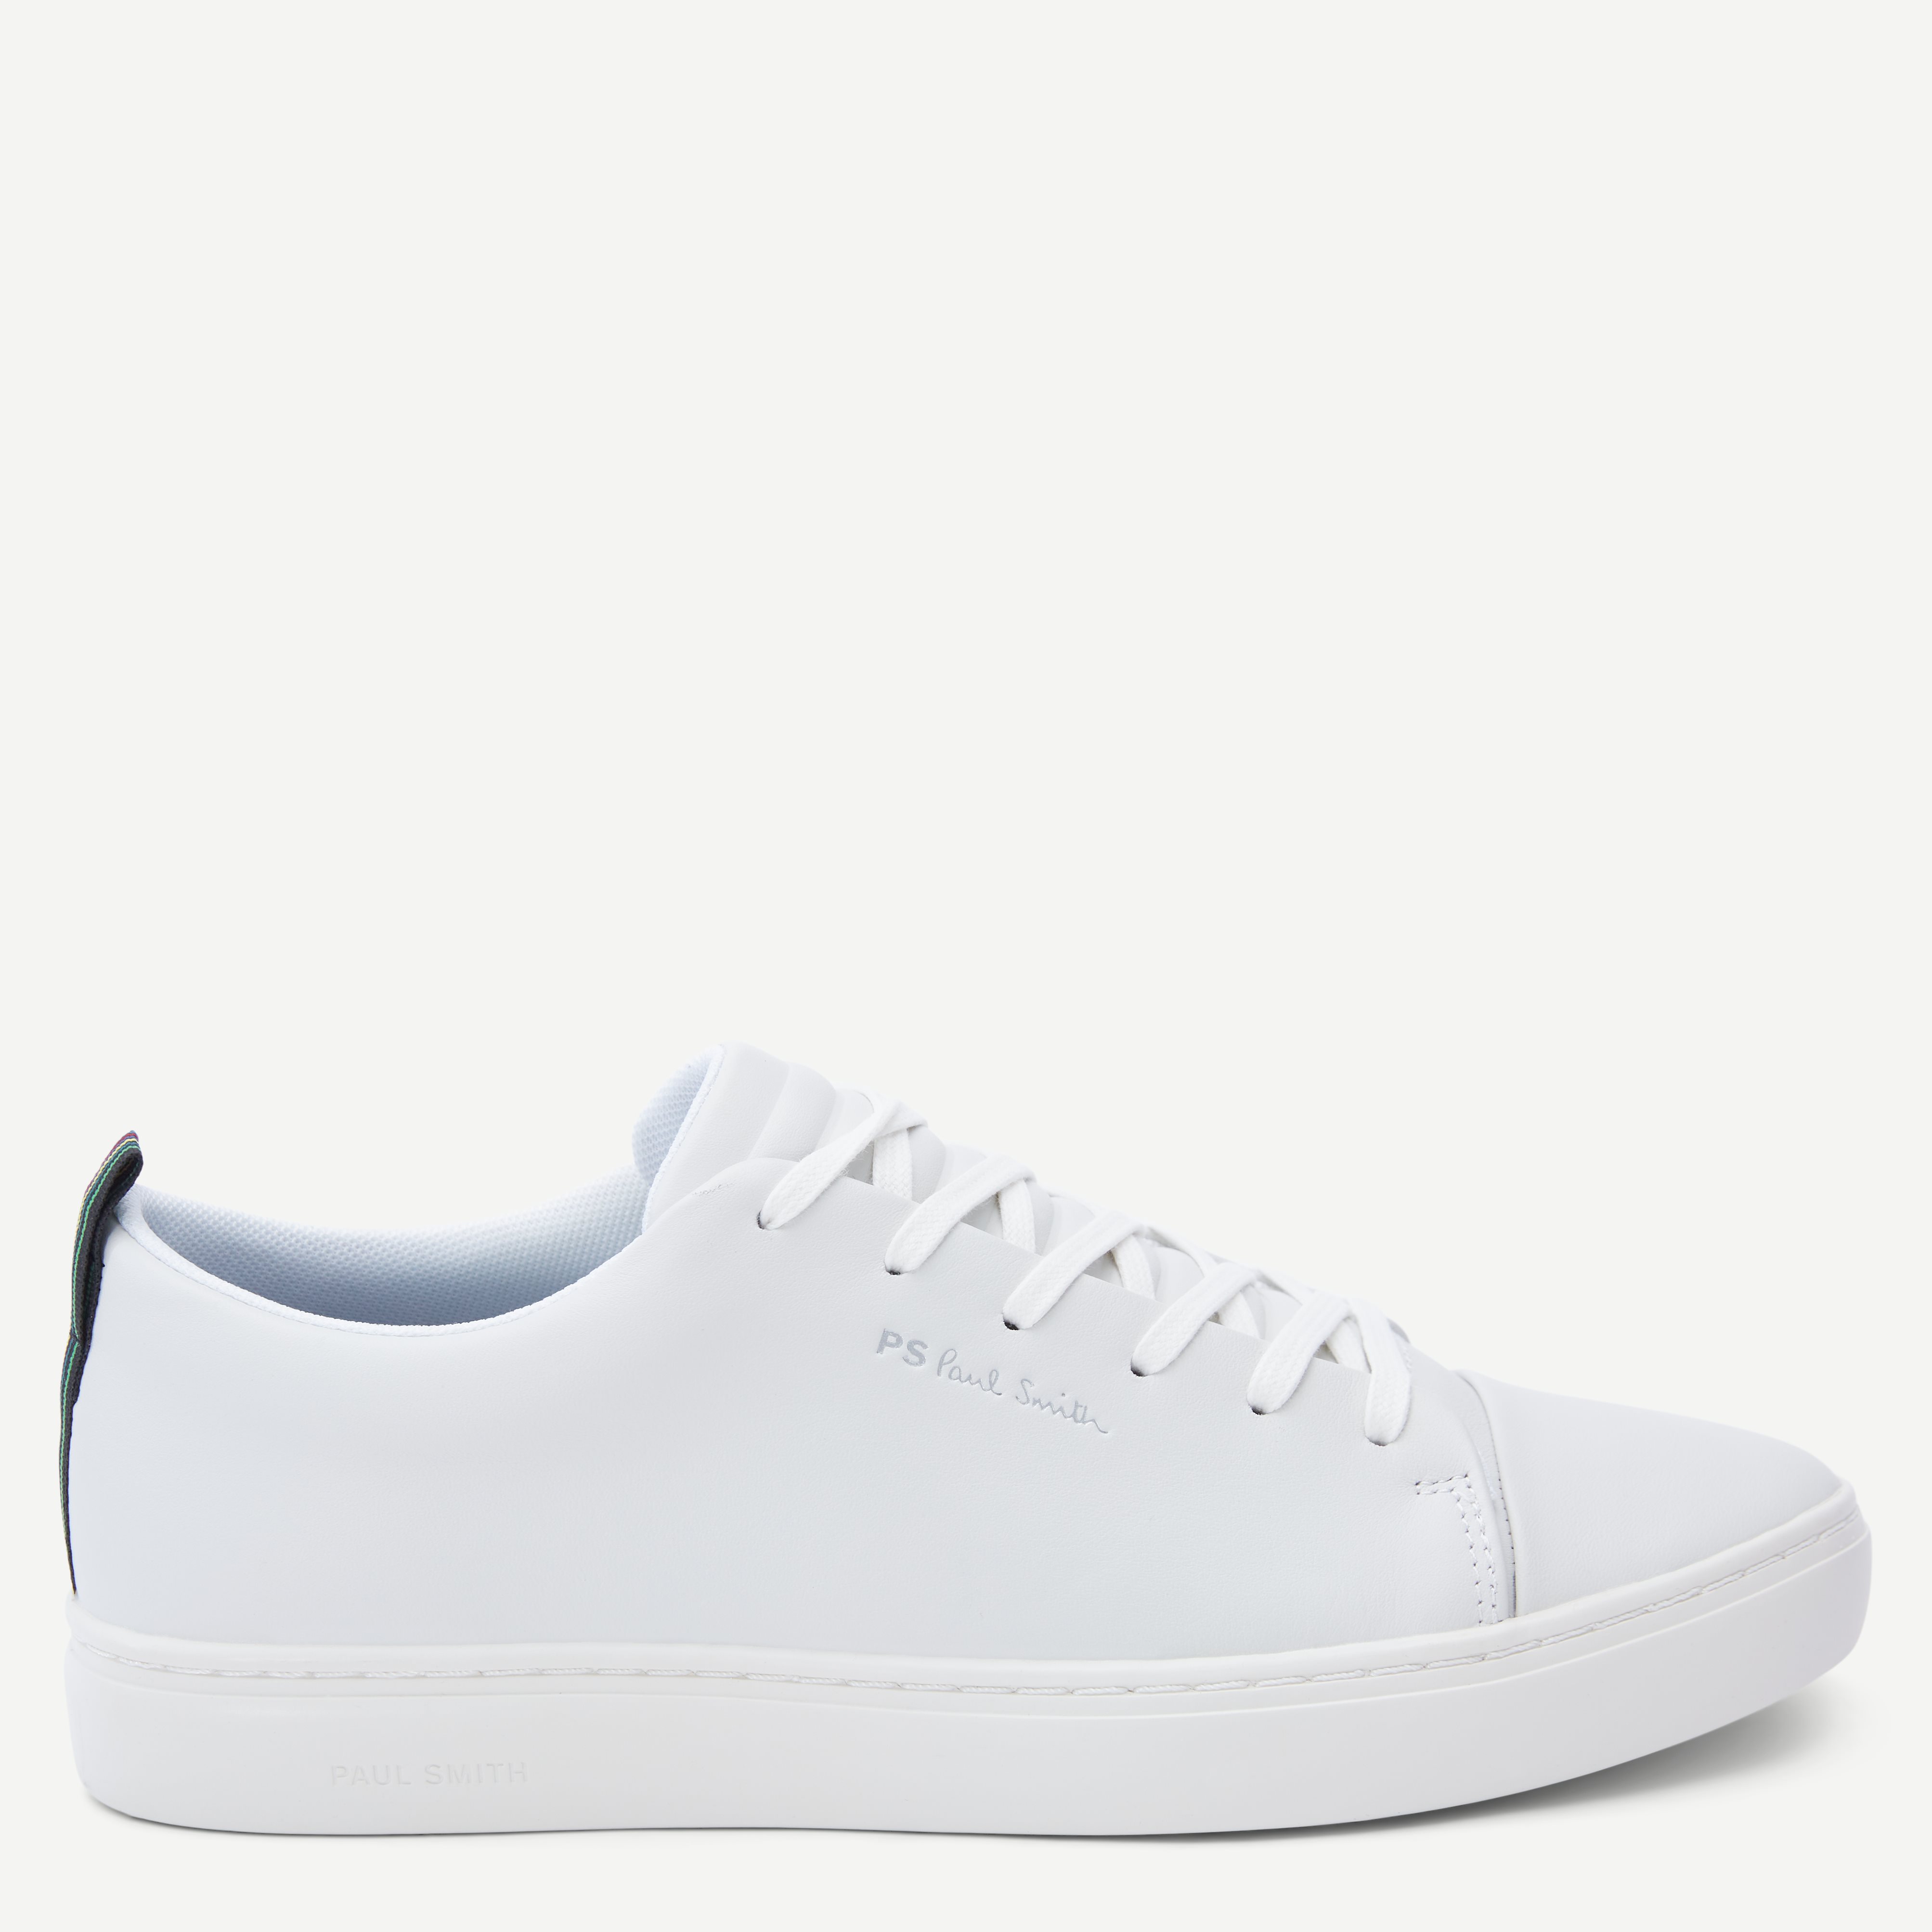 Paul Smith Shoes Shoes LEE20-JLEA MENS SHOE LEE WHITE TAPE. White